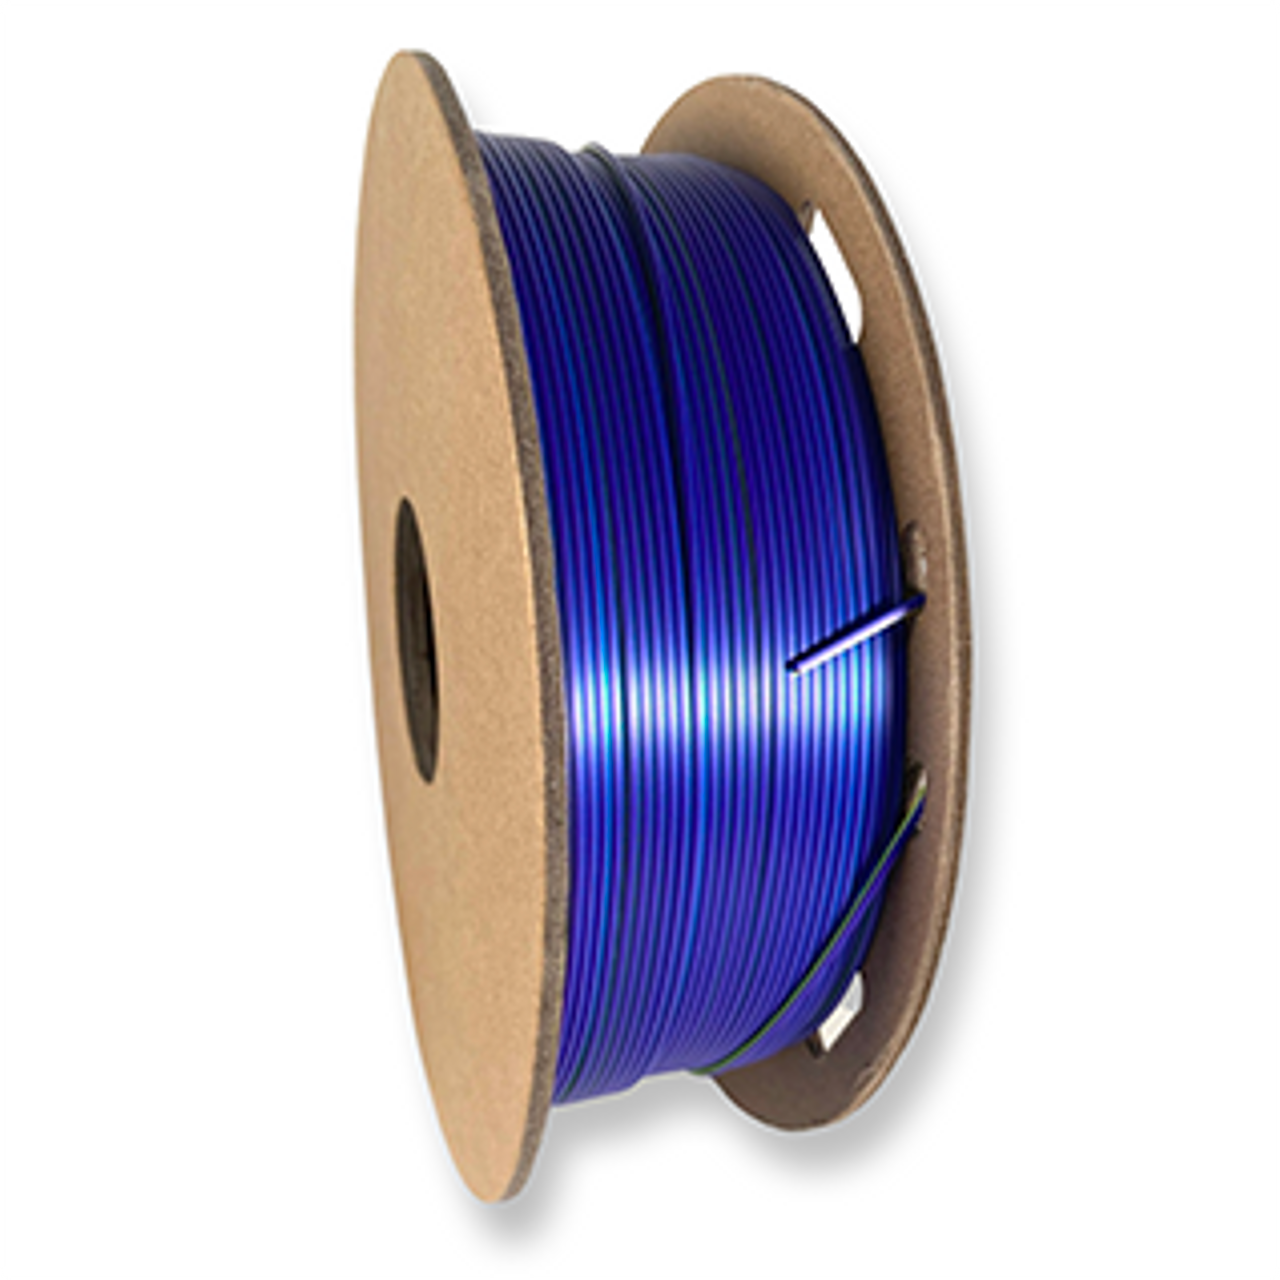 Fuse 3D Tri Colour Silk Blue-Purple-Yellow 3D Printing Filament